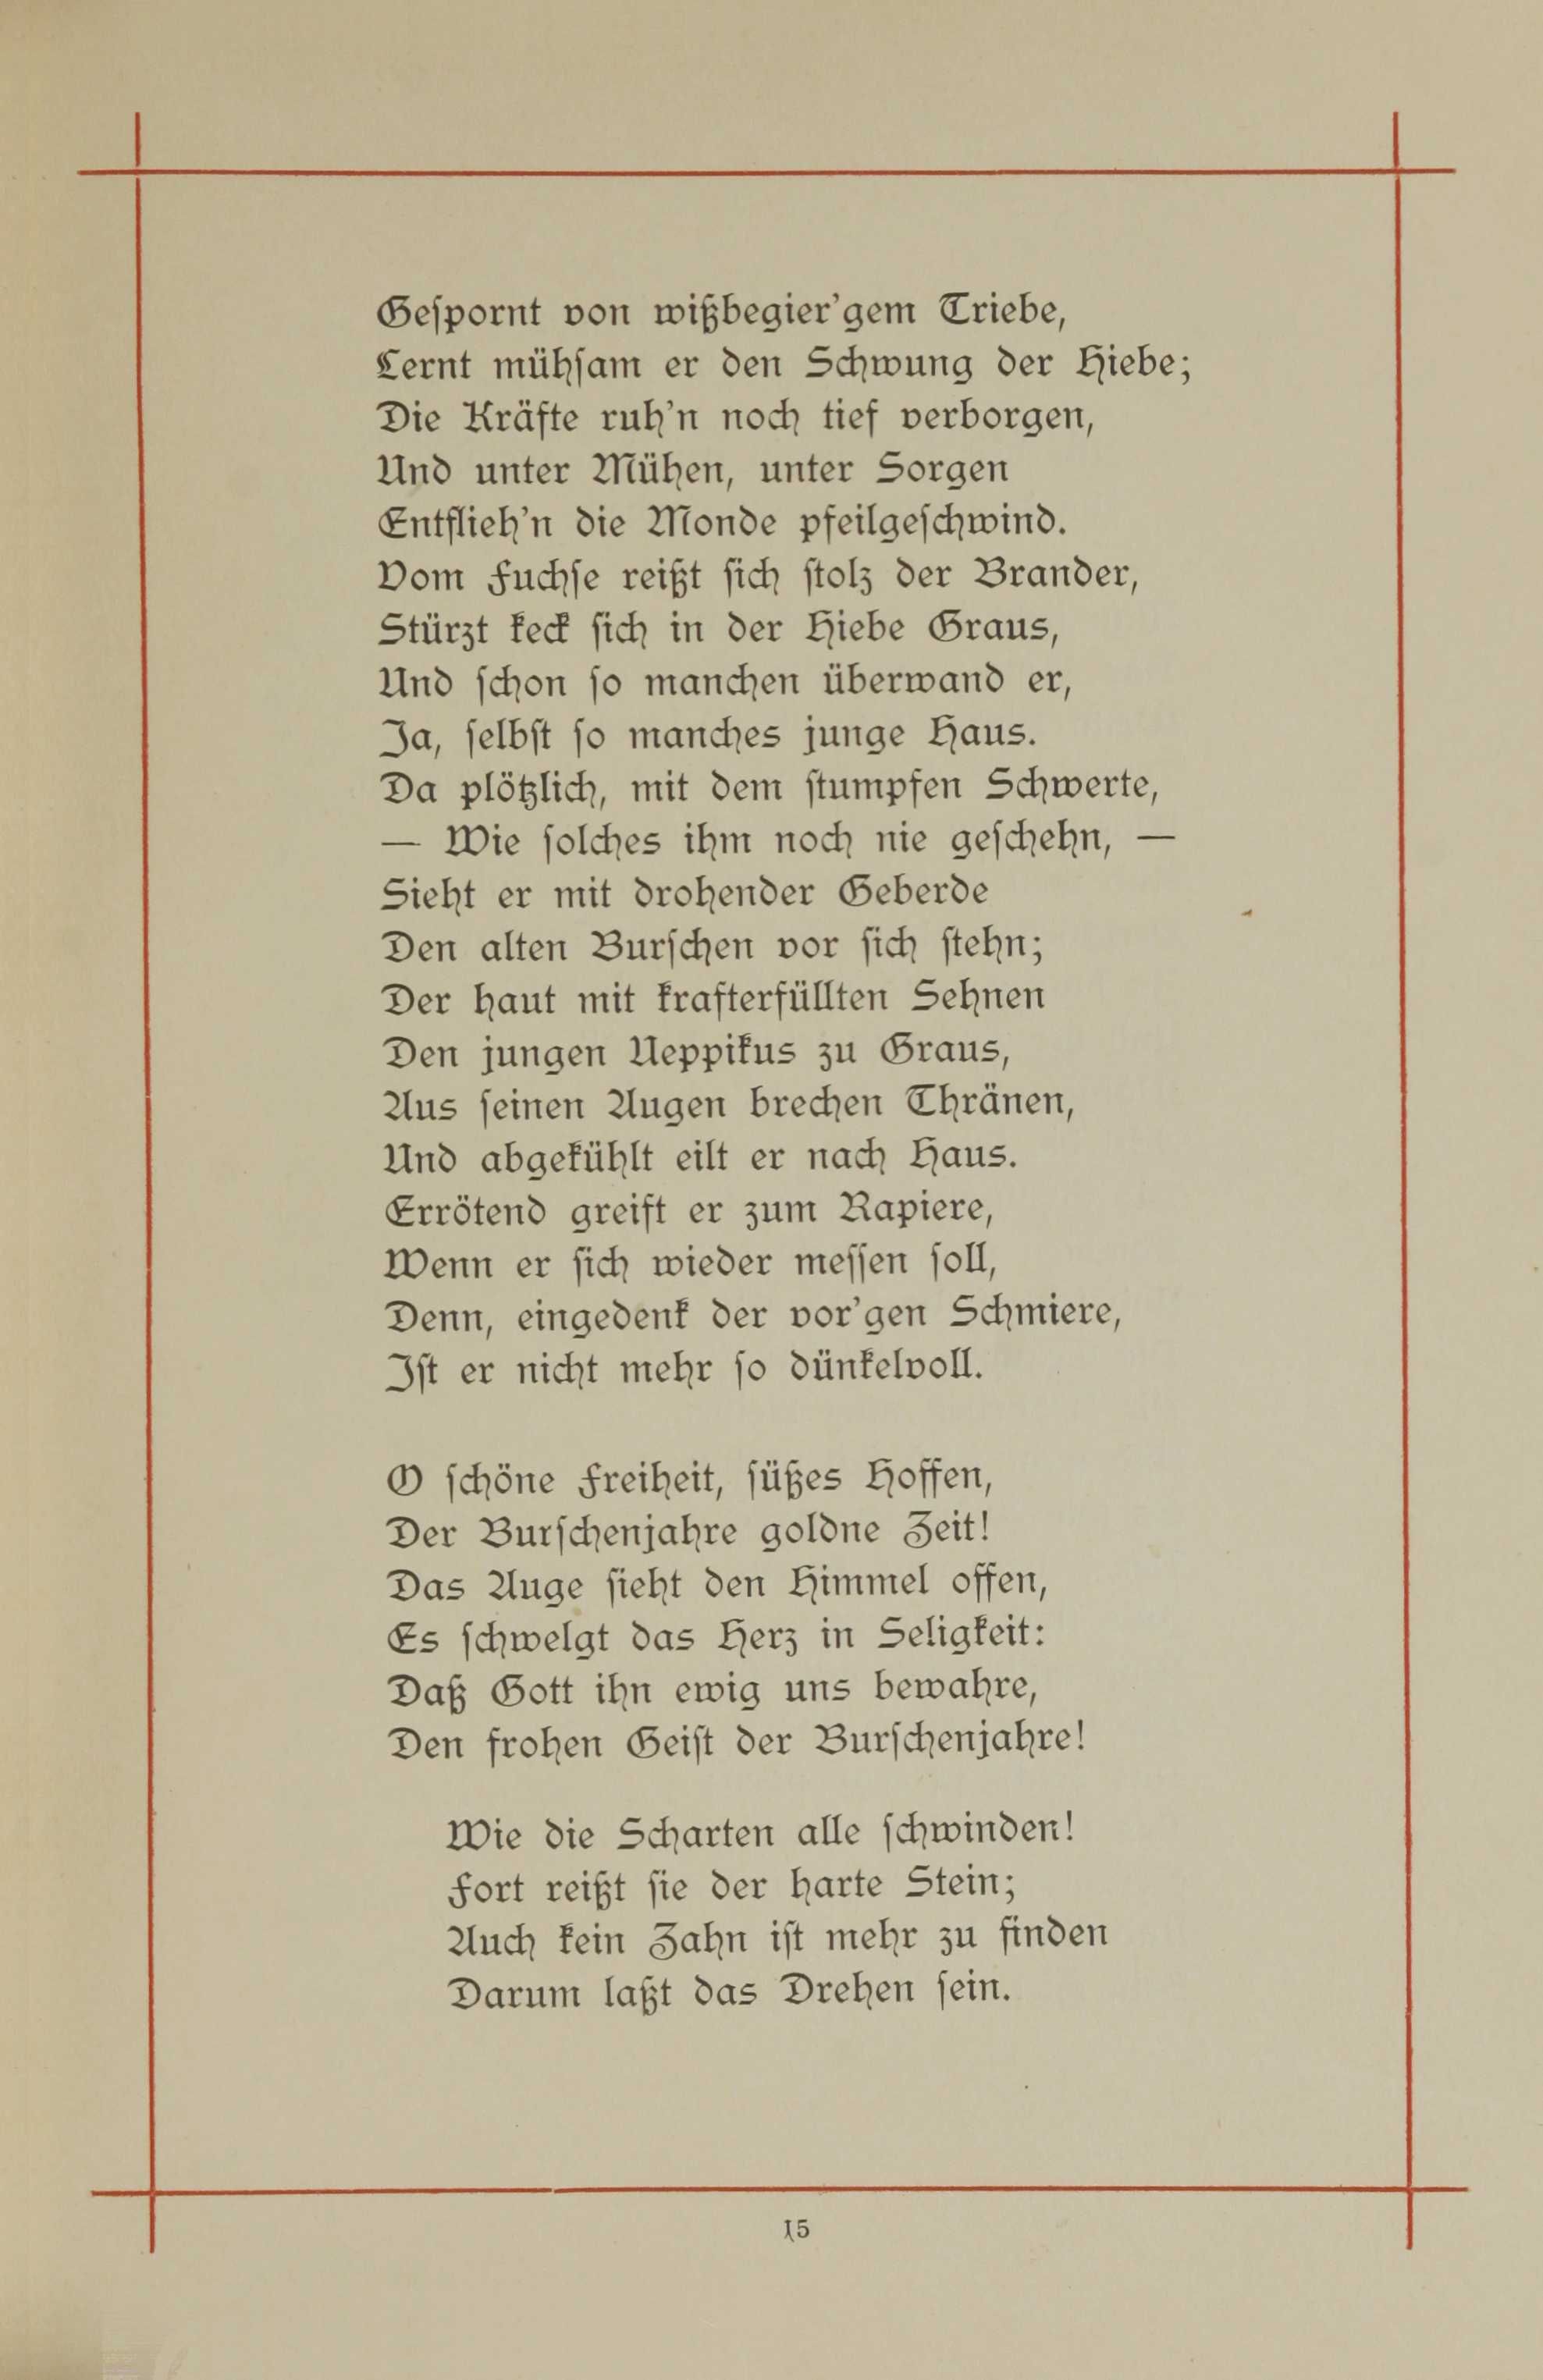 Erinnerung an die Fraternitas (1893) | 20. (15) Основной текст